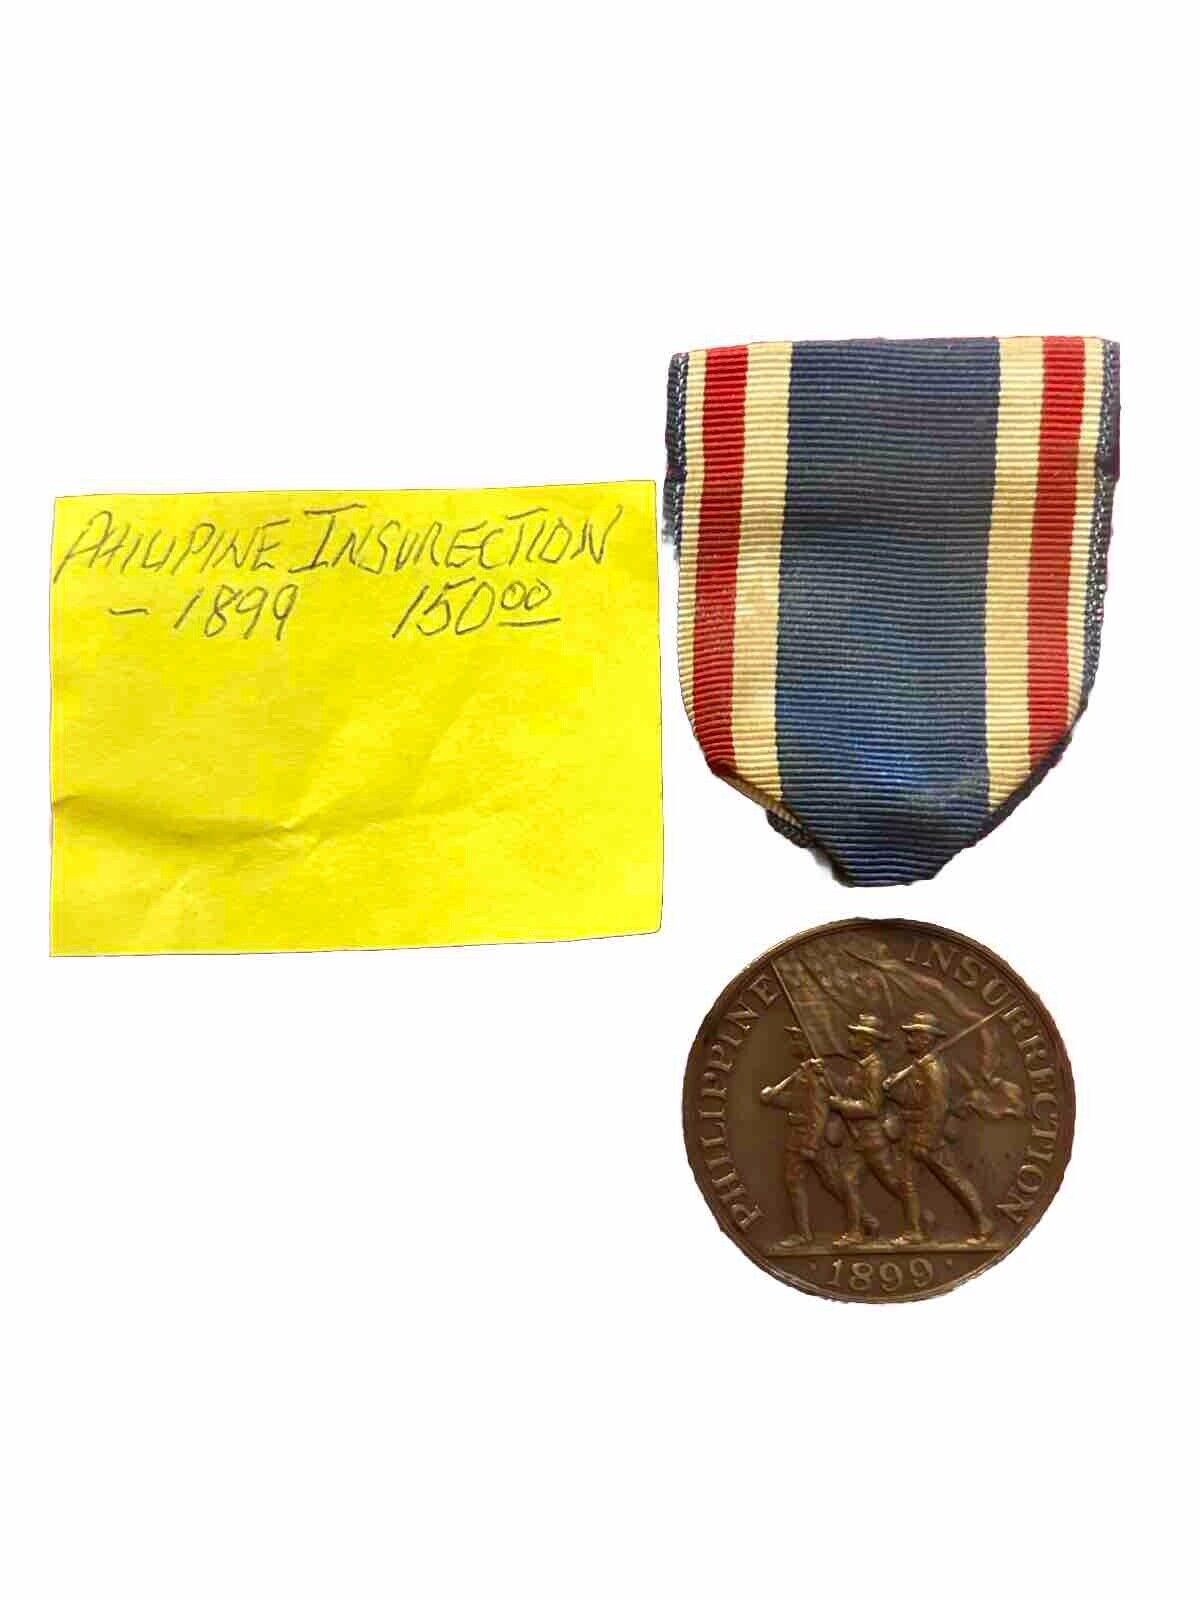 Philippine Insurrection Medal